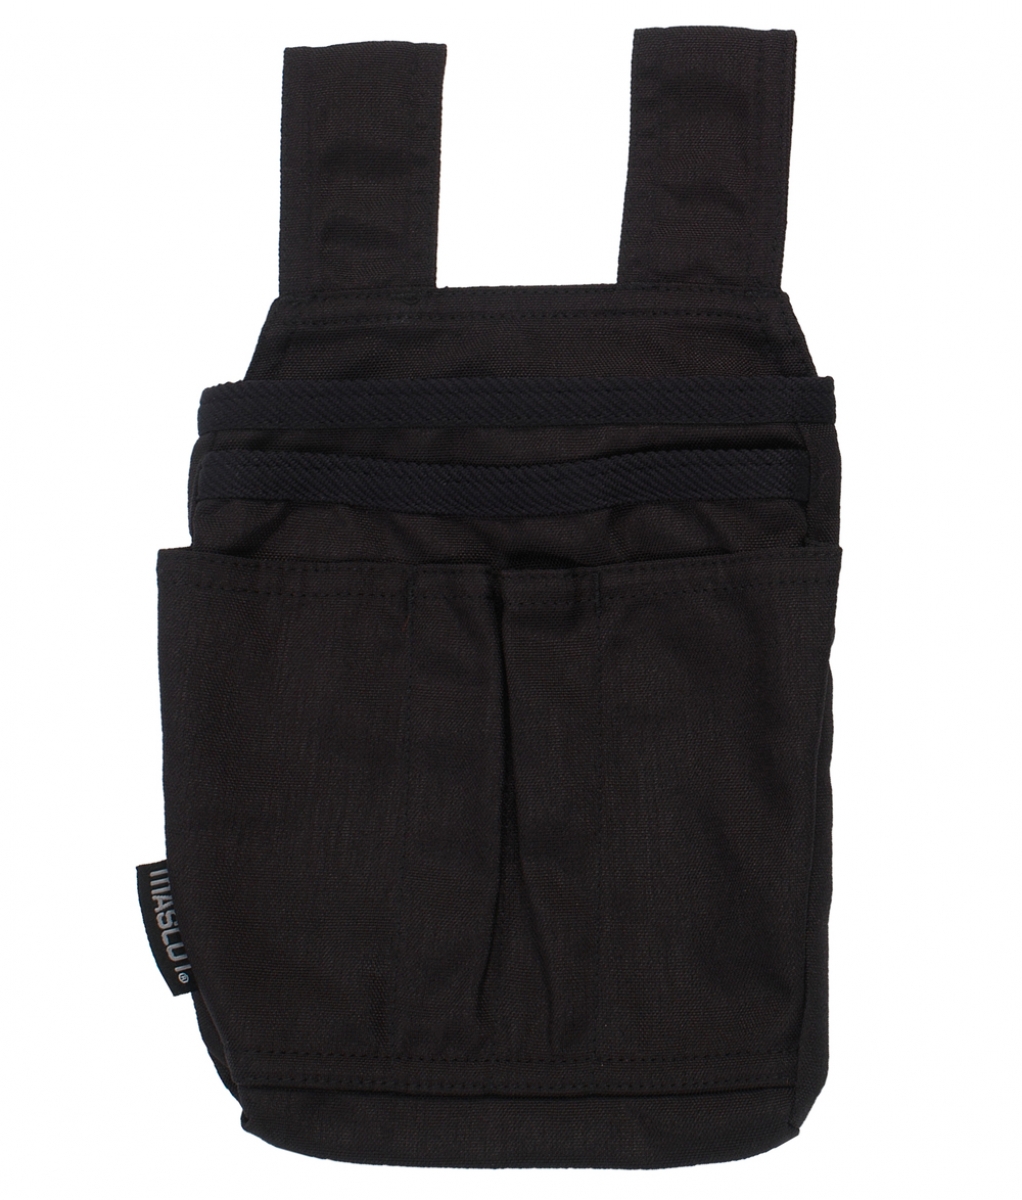 MASCOT-Workwear, Hngetasche, Benoni,  220 g/m, schwarz